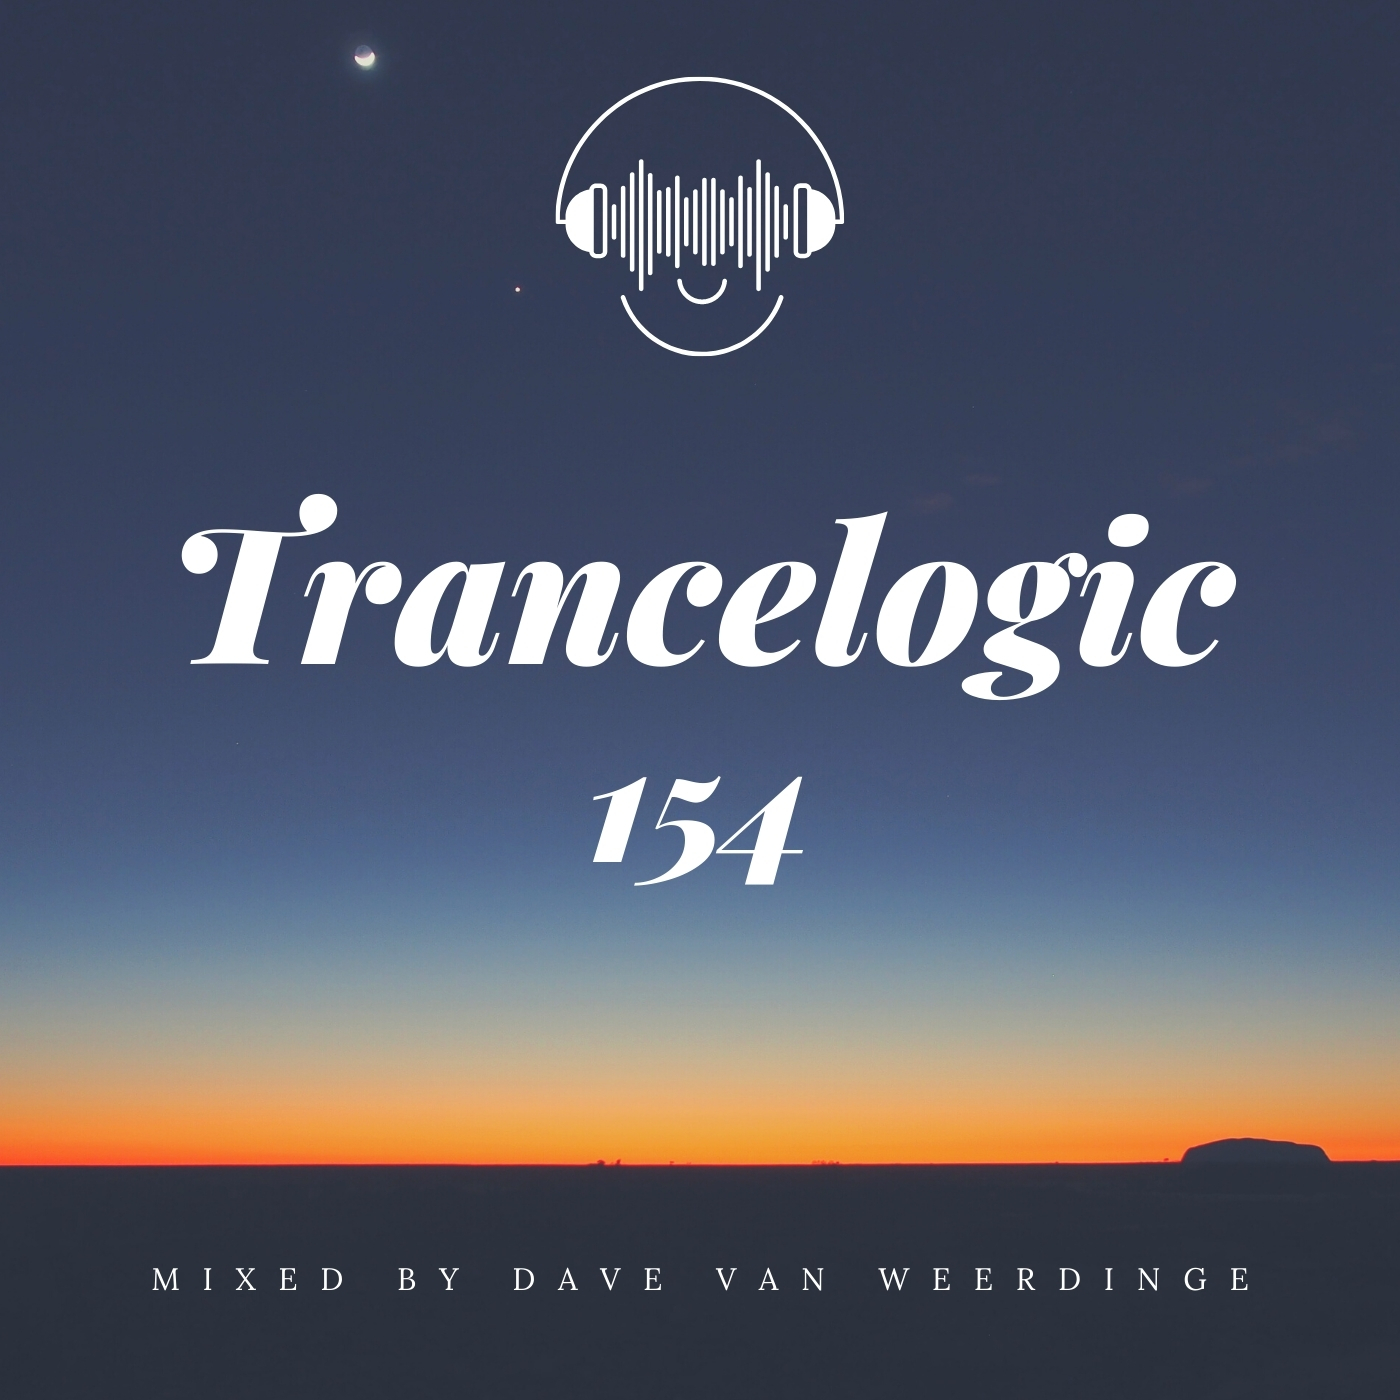 Trancelogic 154 by Dave van Weerdinge